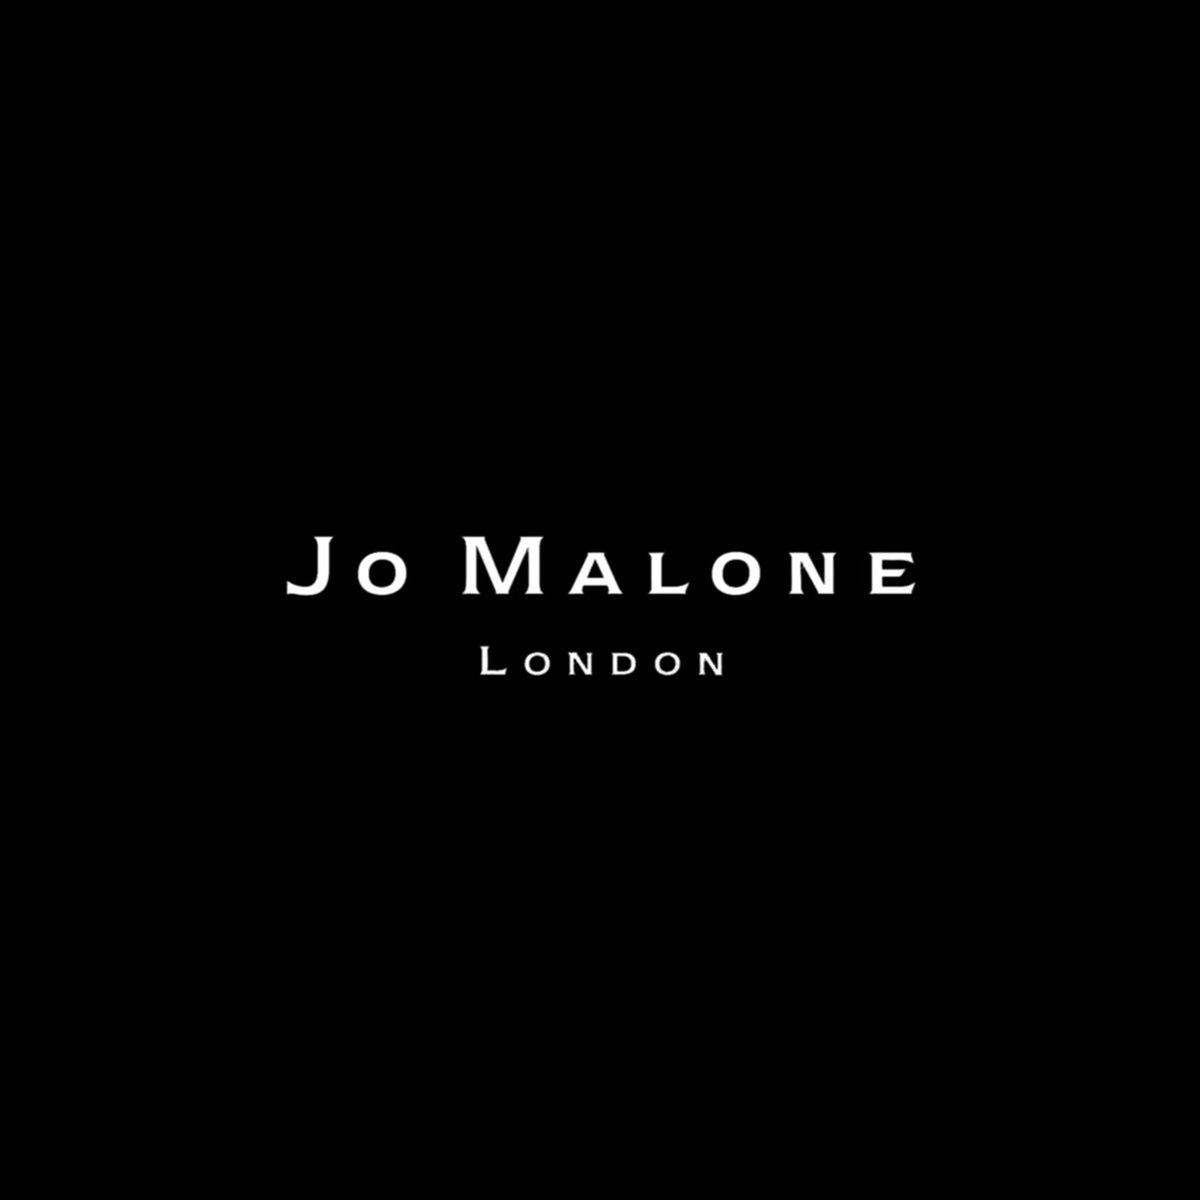 Jo Malone London ג'ו מלון לונדון